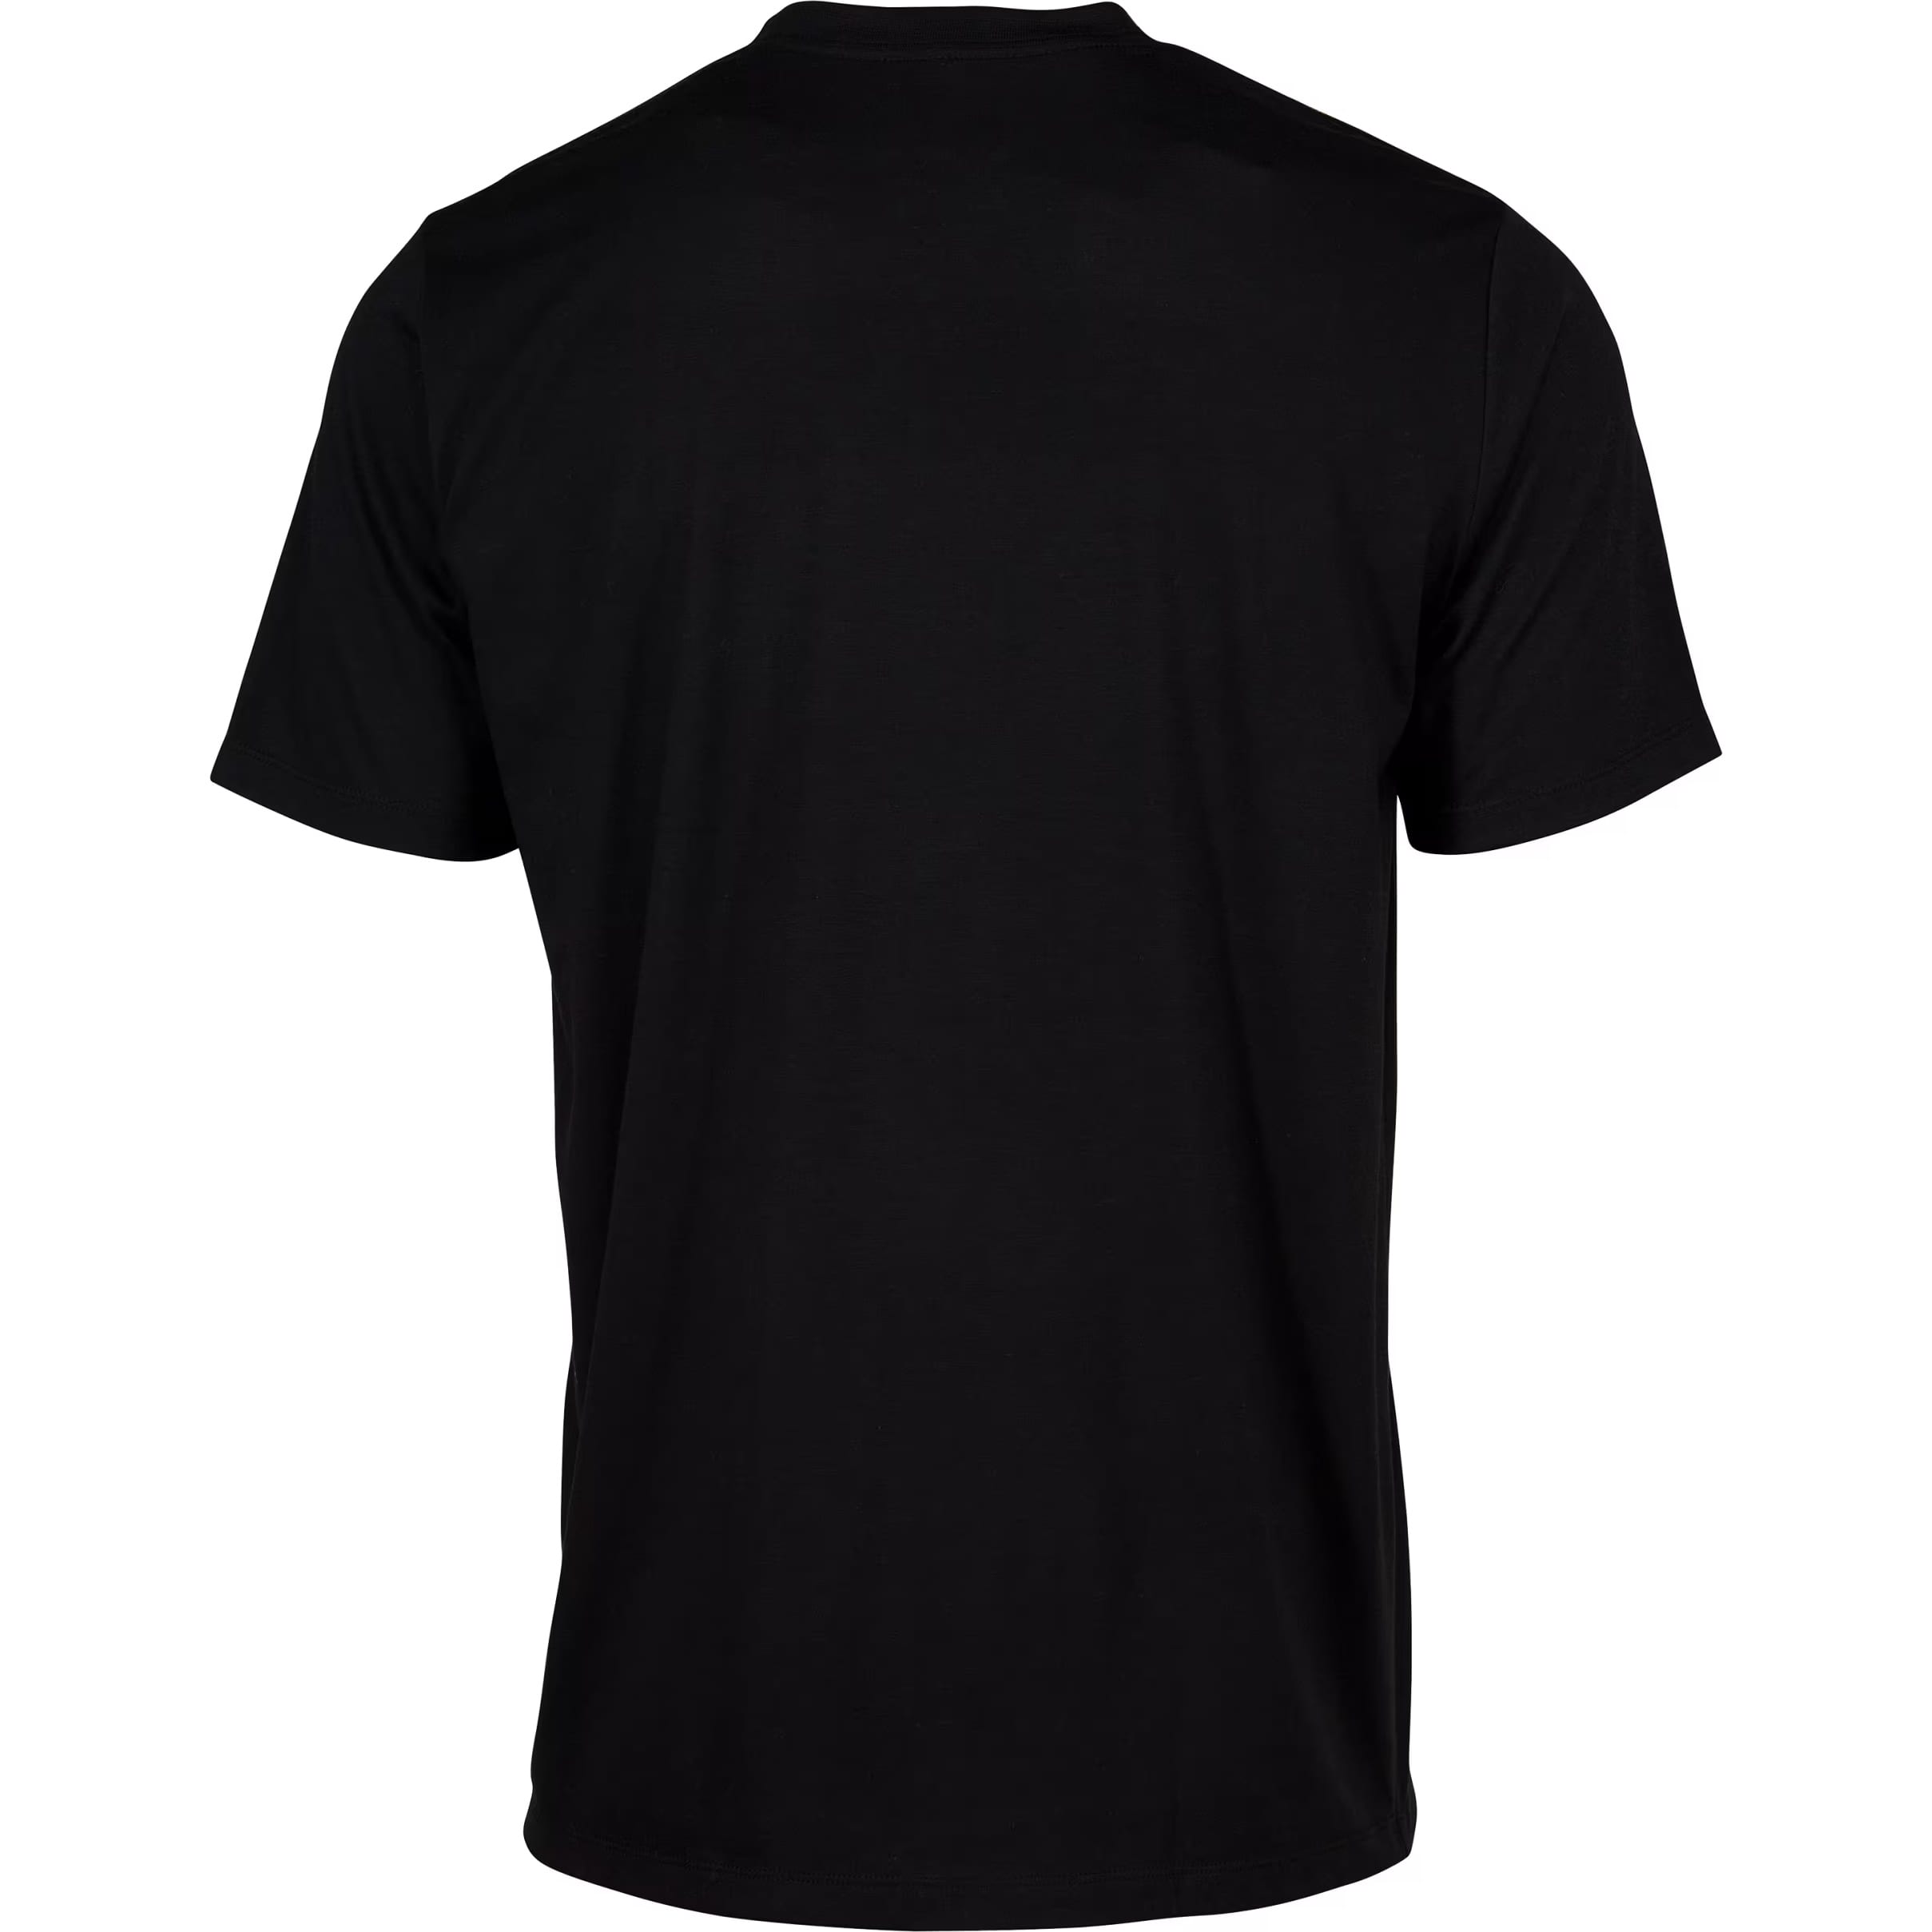 Cabela’s® Men’s Tri-Blend Script Logo Short-Sleeve T-Shirt